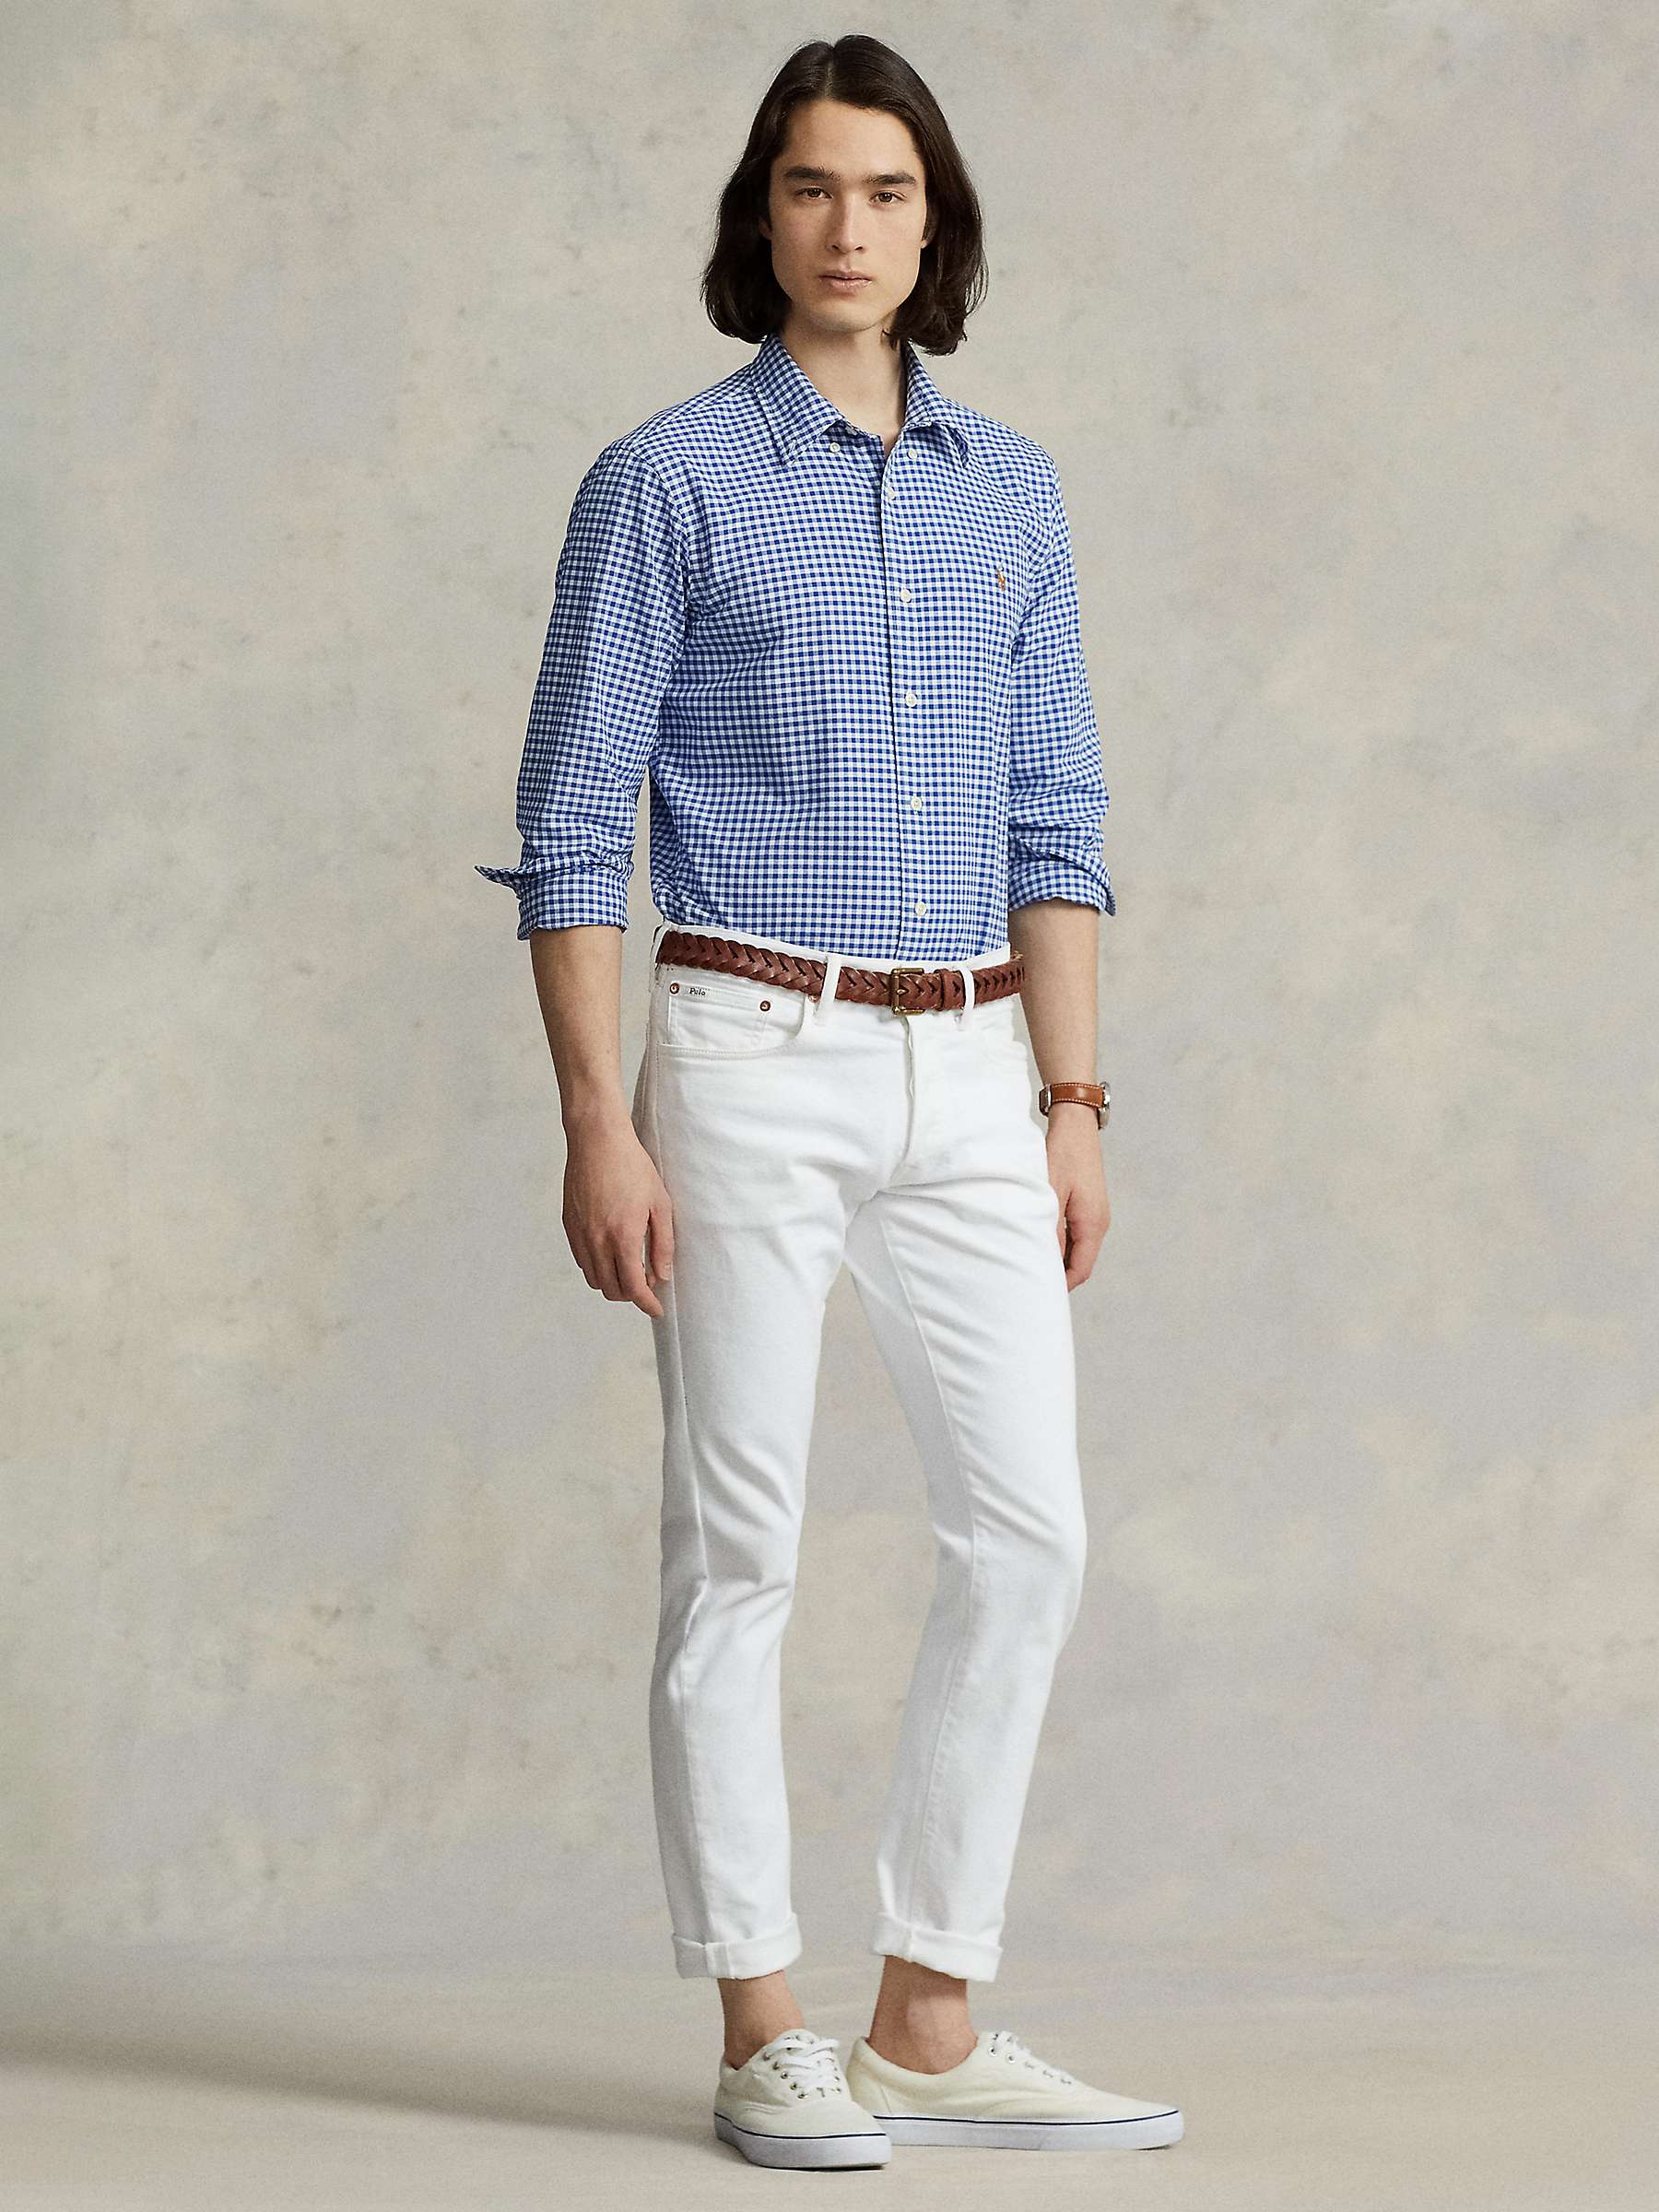 Buy Polo Ralph Lauren Custom Fit Oxford Shirt, Gingham Blue / White Online at johnlewis.com